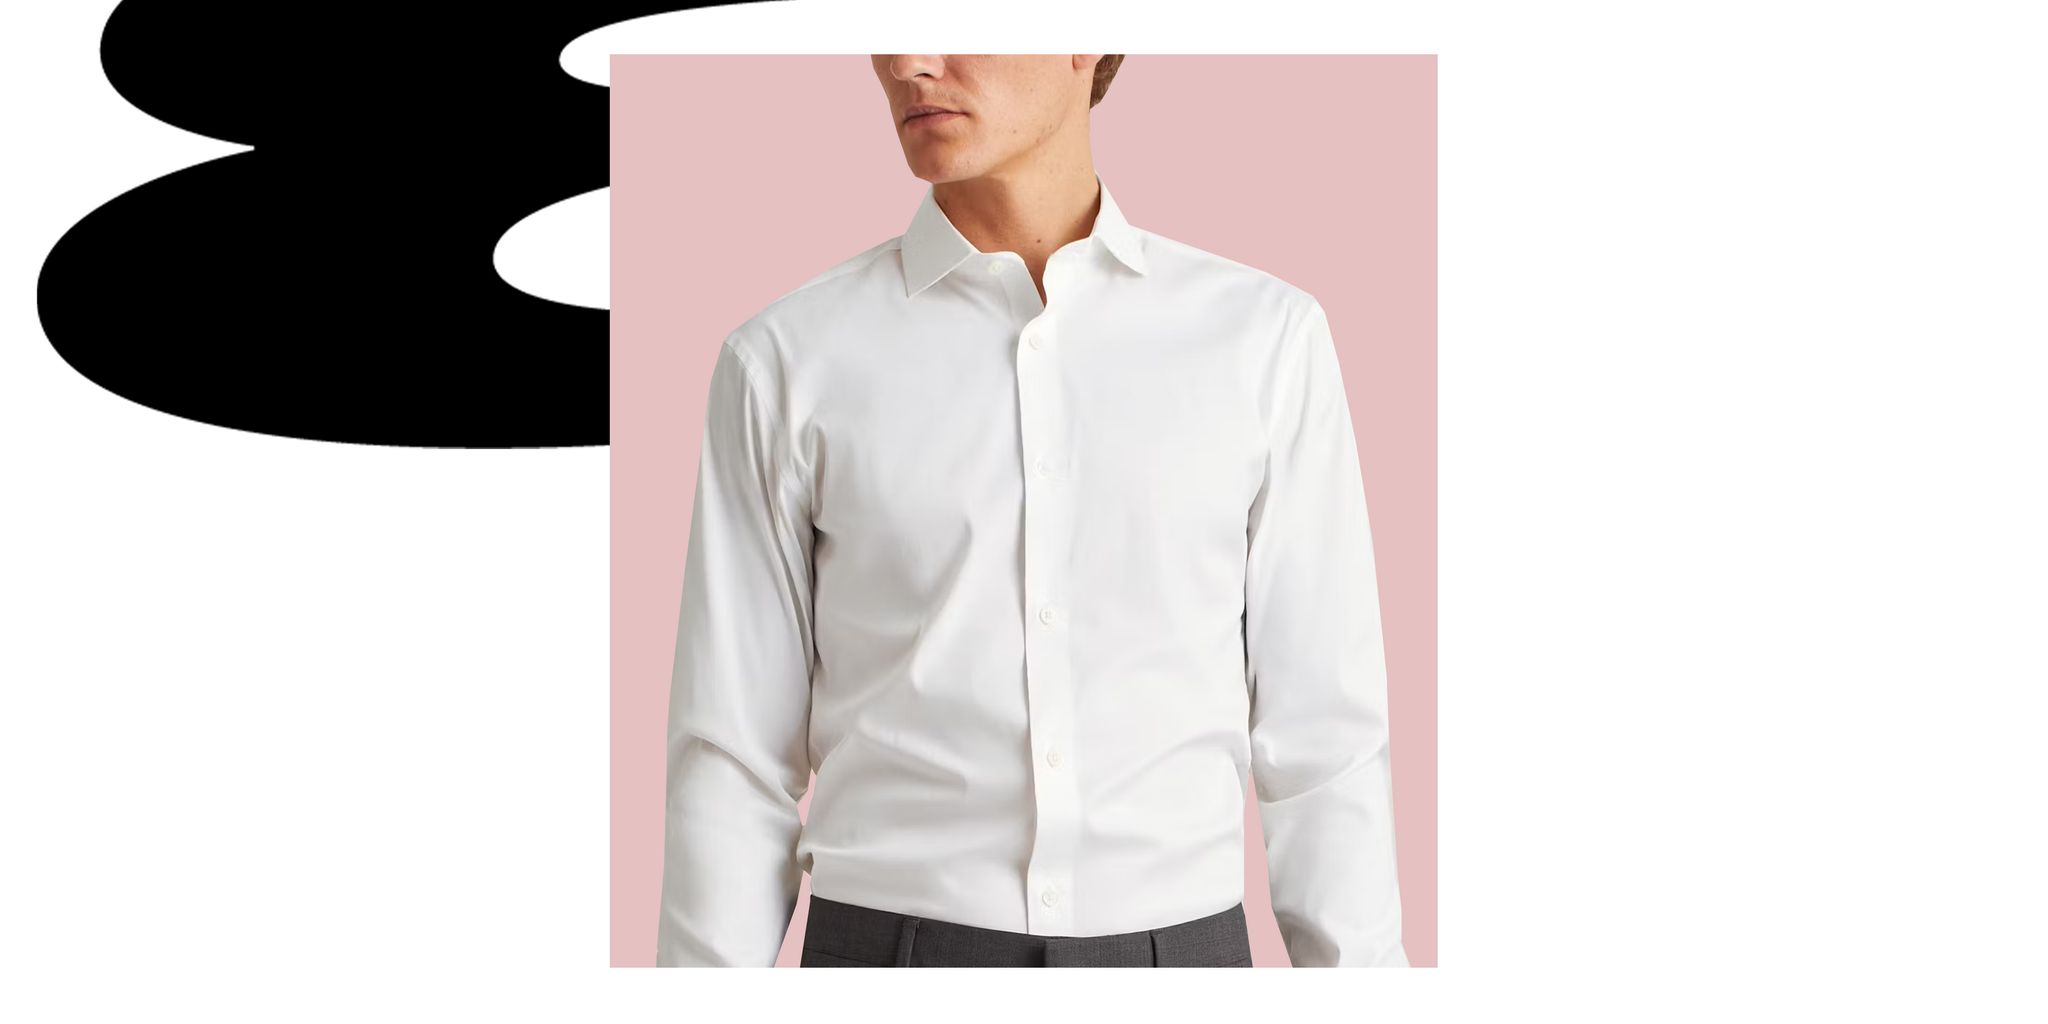 Cuff Design Options: Dress Shirts - Proper Cloth Help